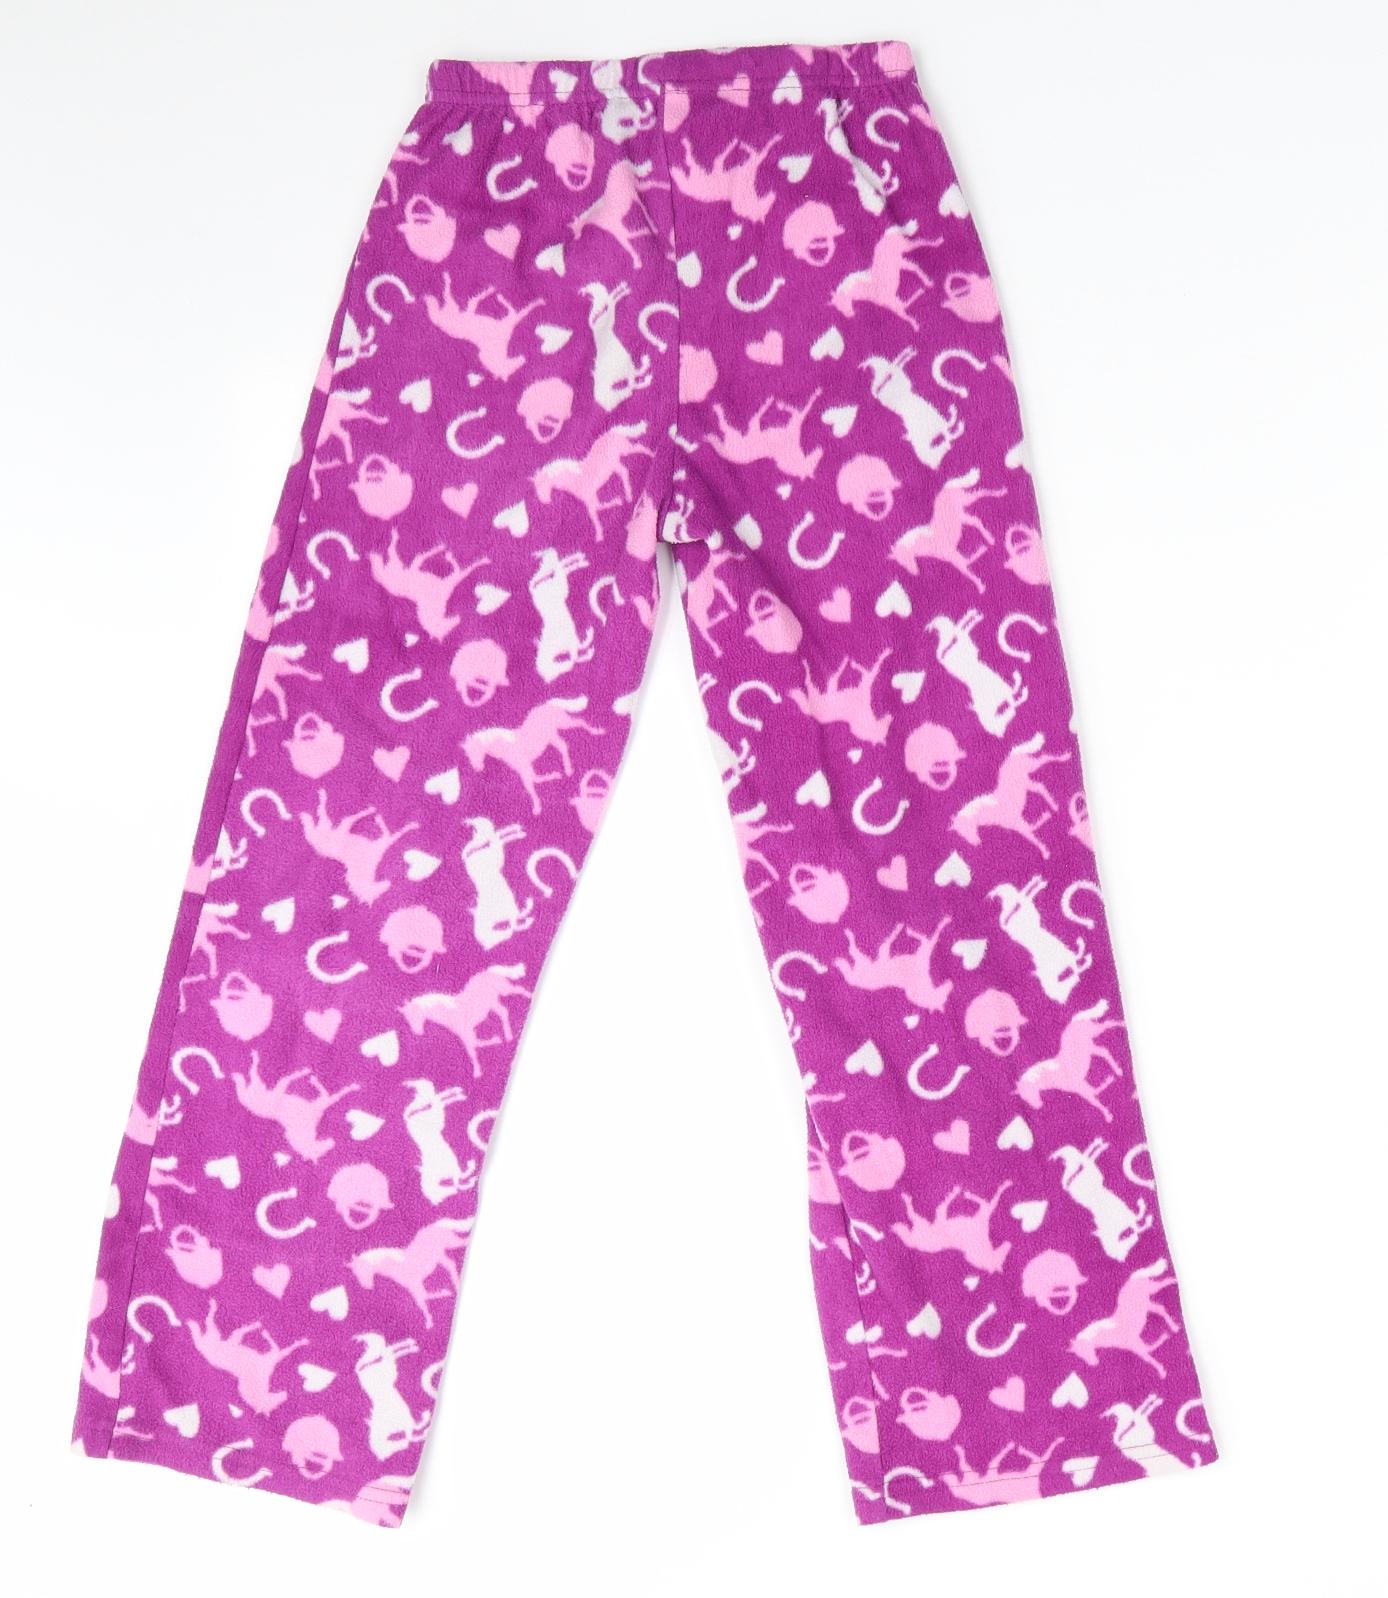 Sleep  Boutique Girls Purple Animal Print Polyester  Pyjama Pants Size 7-8 Years   - Horses